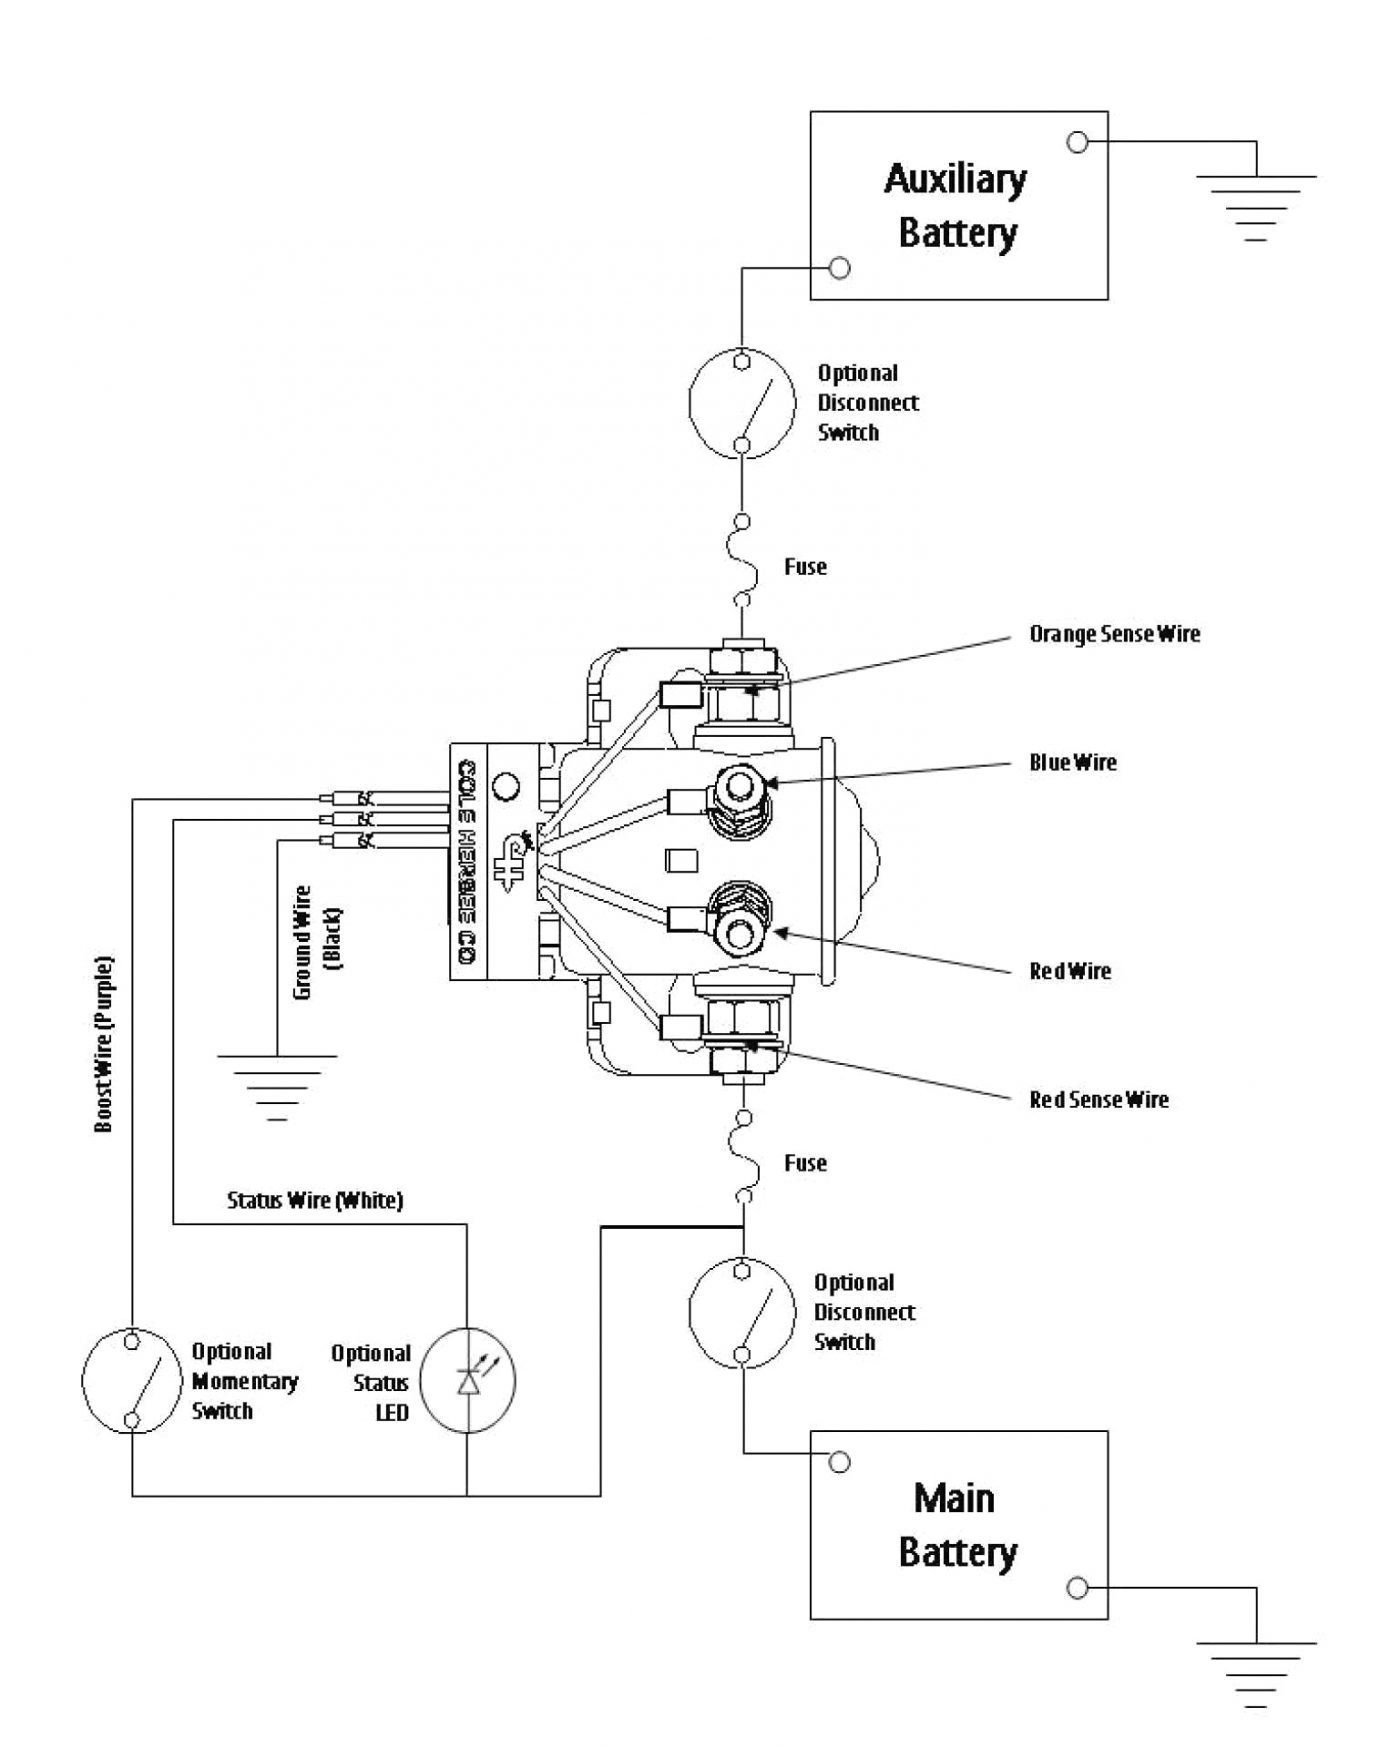 Daewoo Matiz Engine Diagram Jayco Wiring Harness Diagram Library Wiring Diagrams • Of Daewoo Matiz Engine Diagram